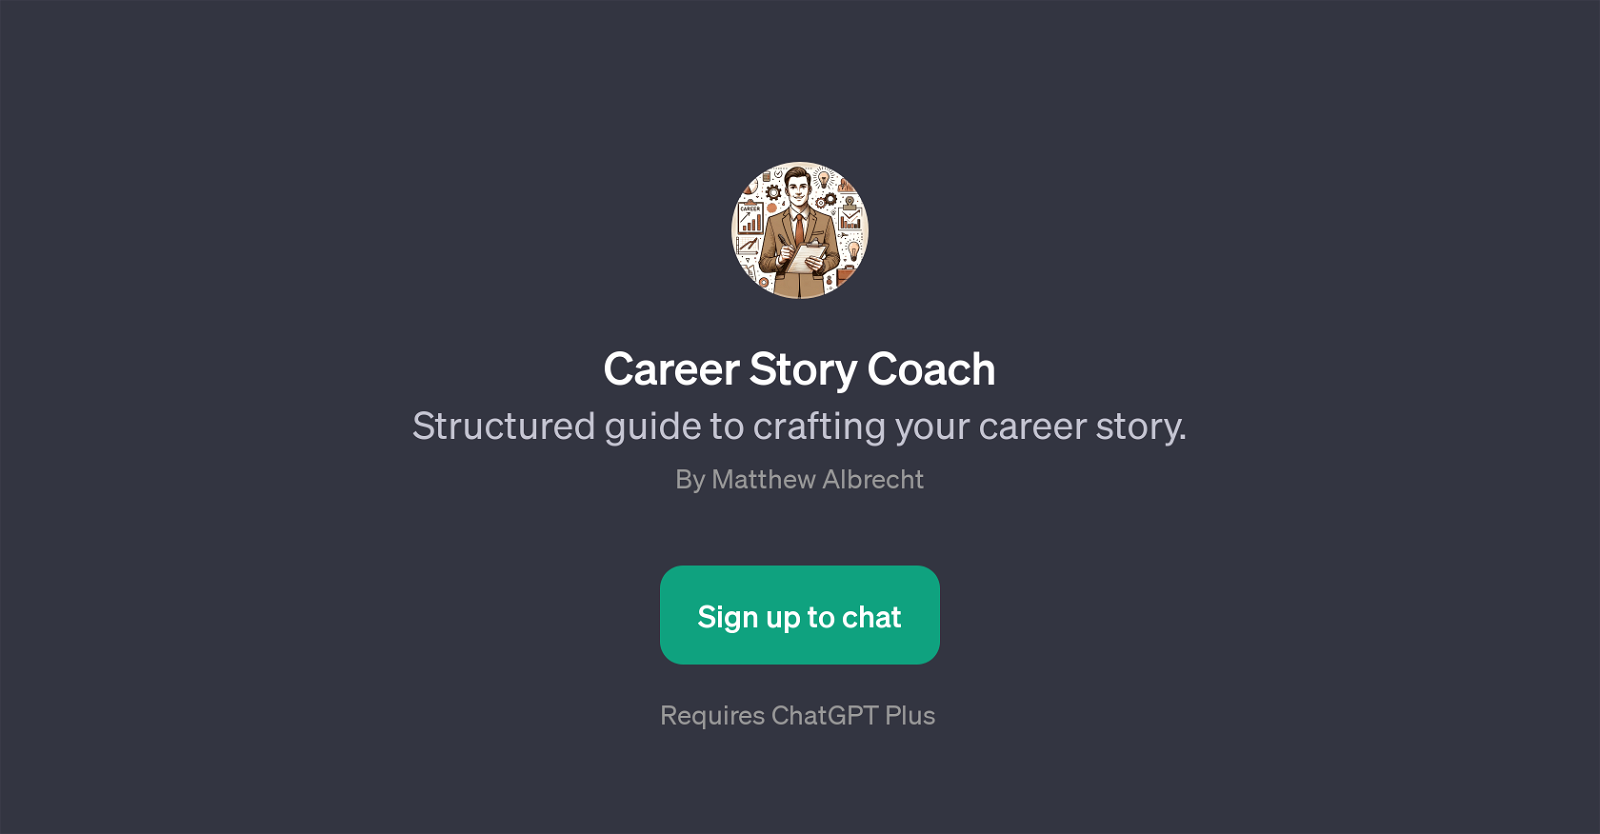 Career Story Coach website